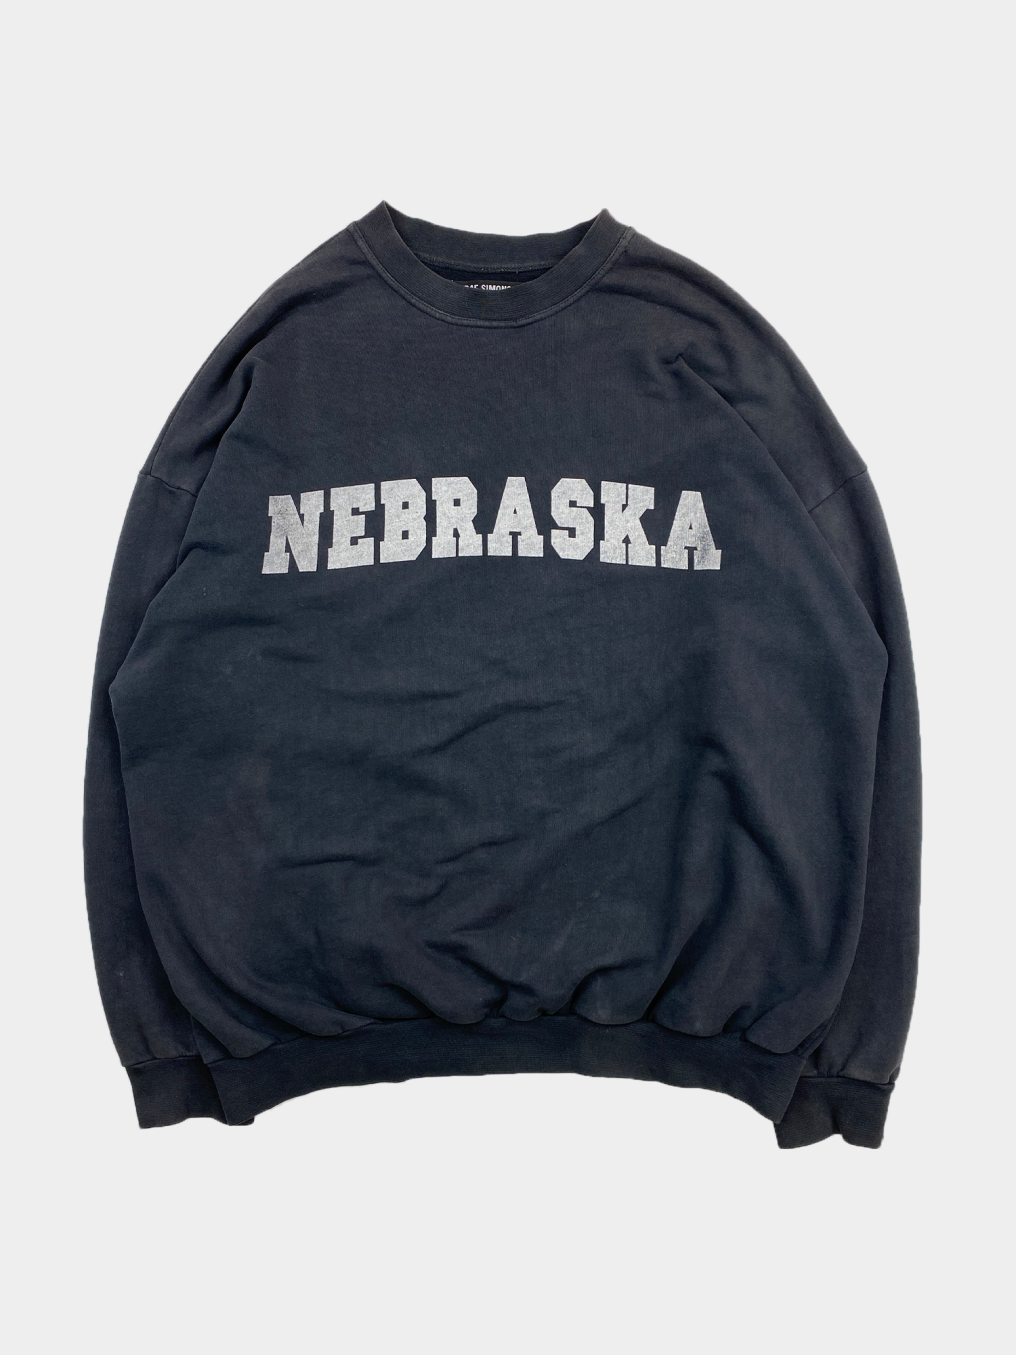 RAF SIMONS Nebraska Sweater — ARCHIVED